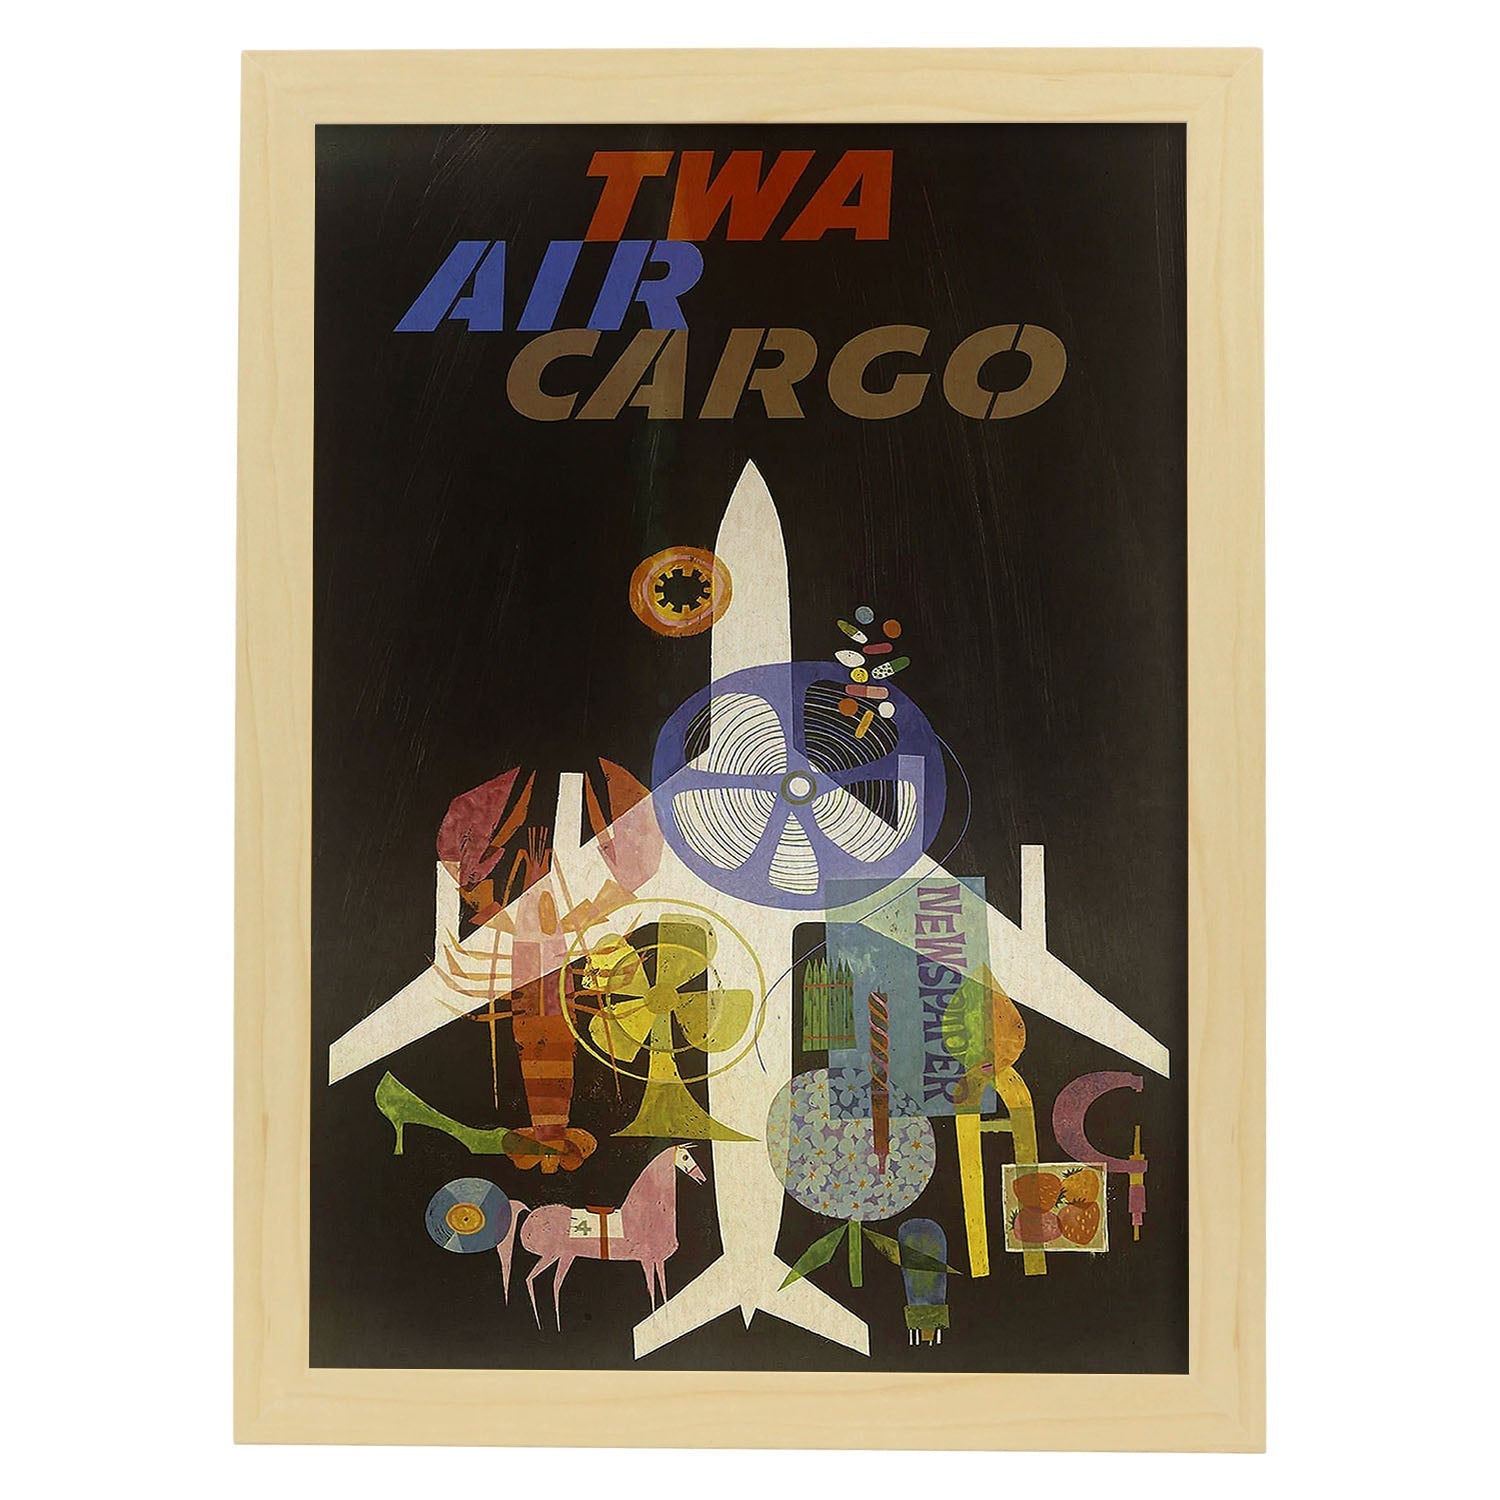 Poster vintage. Cartel vintage de Europa. Avion de carga.-Artwork-Nacnic-A4-Marco Madera clara-Nacnic Estudio SL